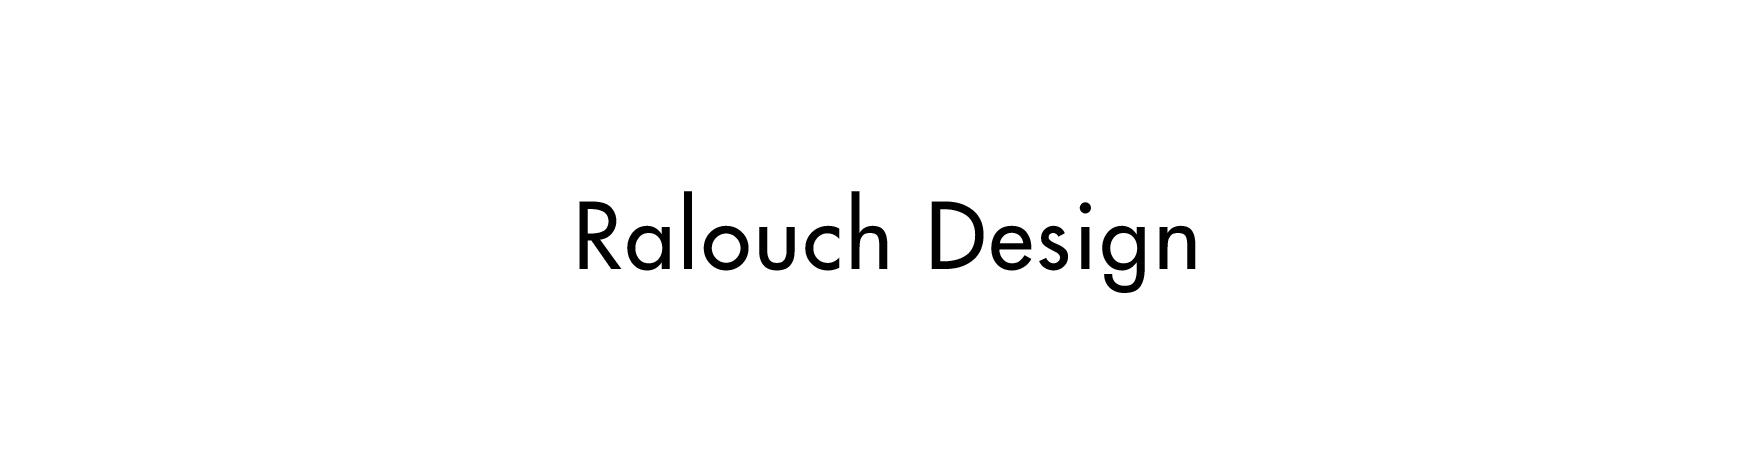 Ralouch Design